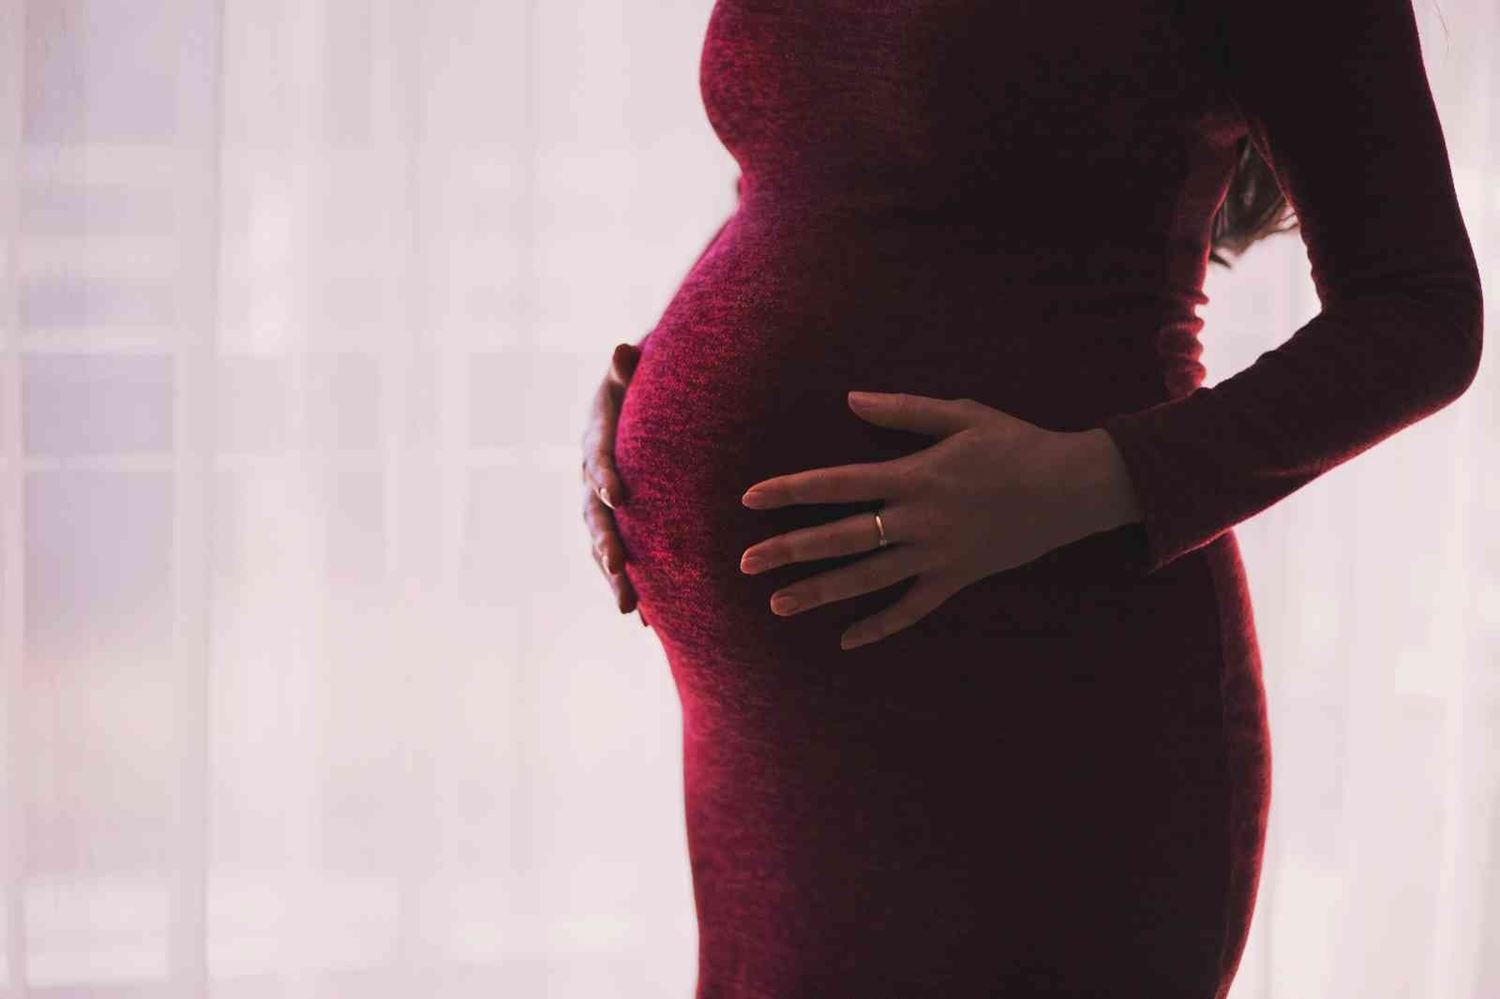 Anne adaylarna hamilelik ncesi 'vcudunuzu hazrlayn' tavsiyesi